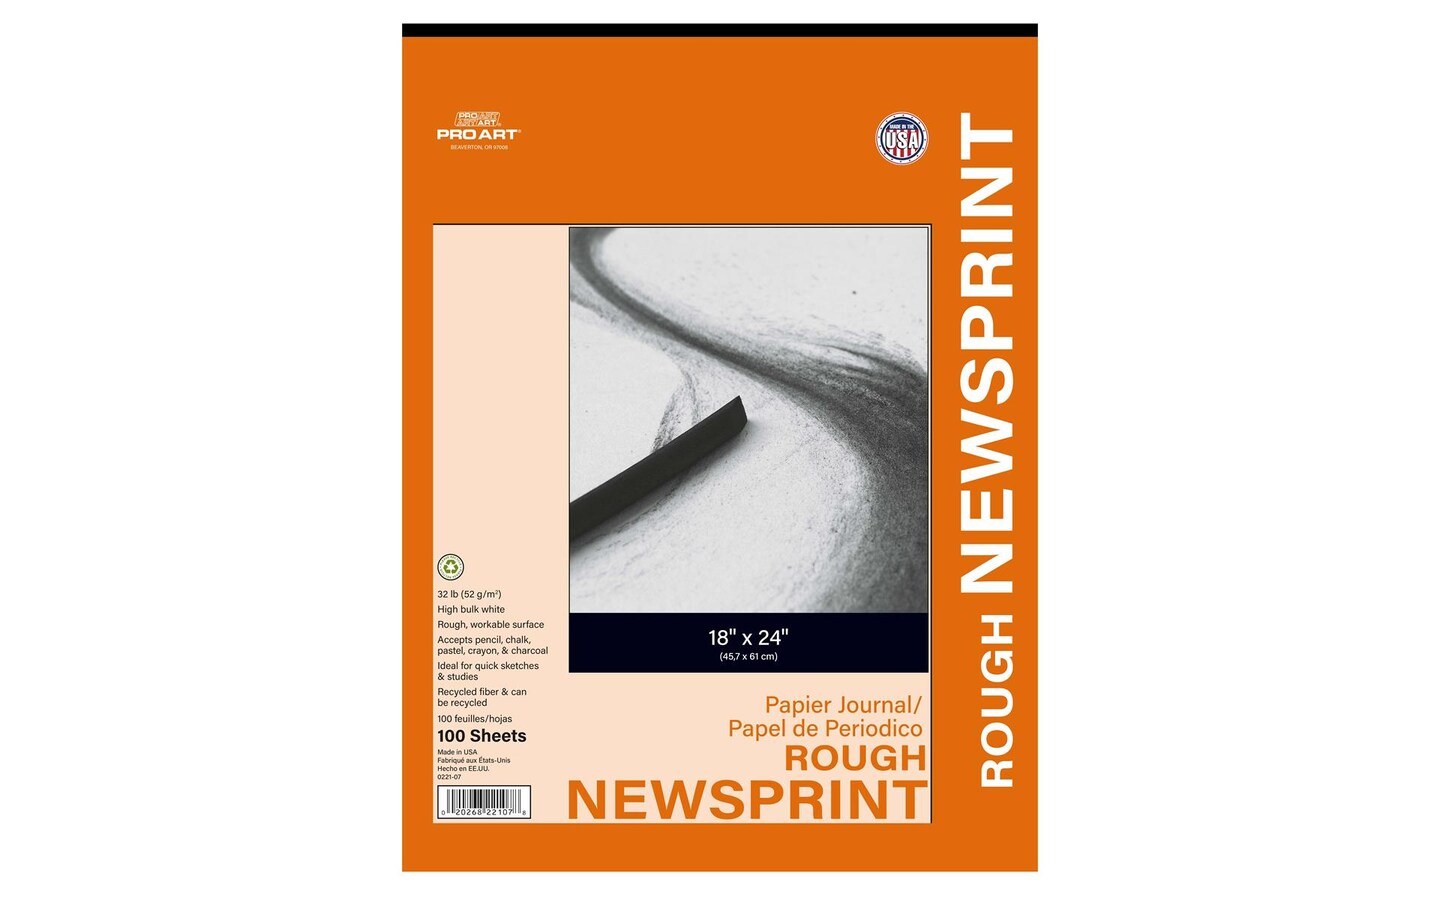 PRO ART Newsprint Paper Drawing Pad & Sketch Pad, 18x24, 100 Sheet